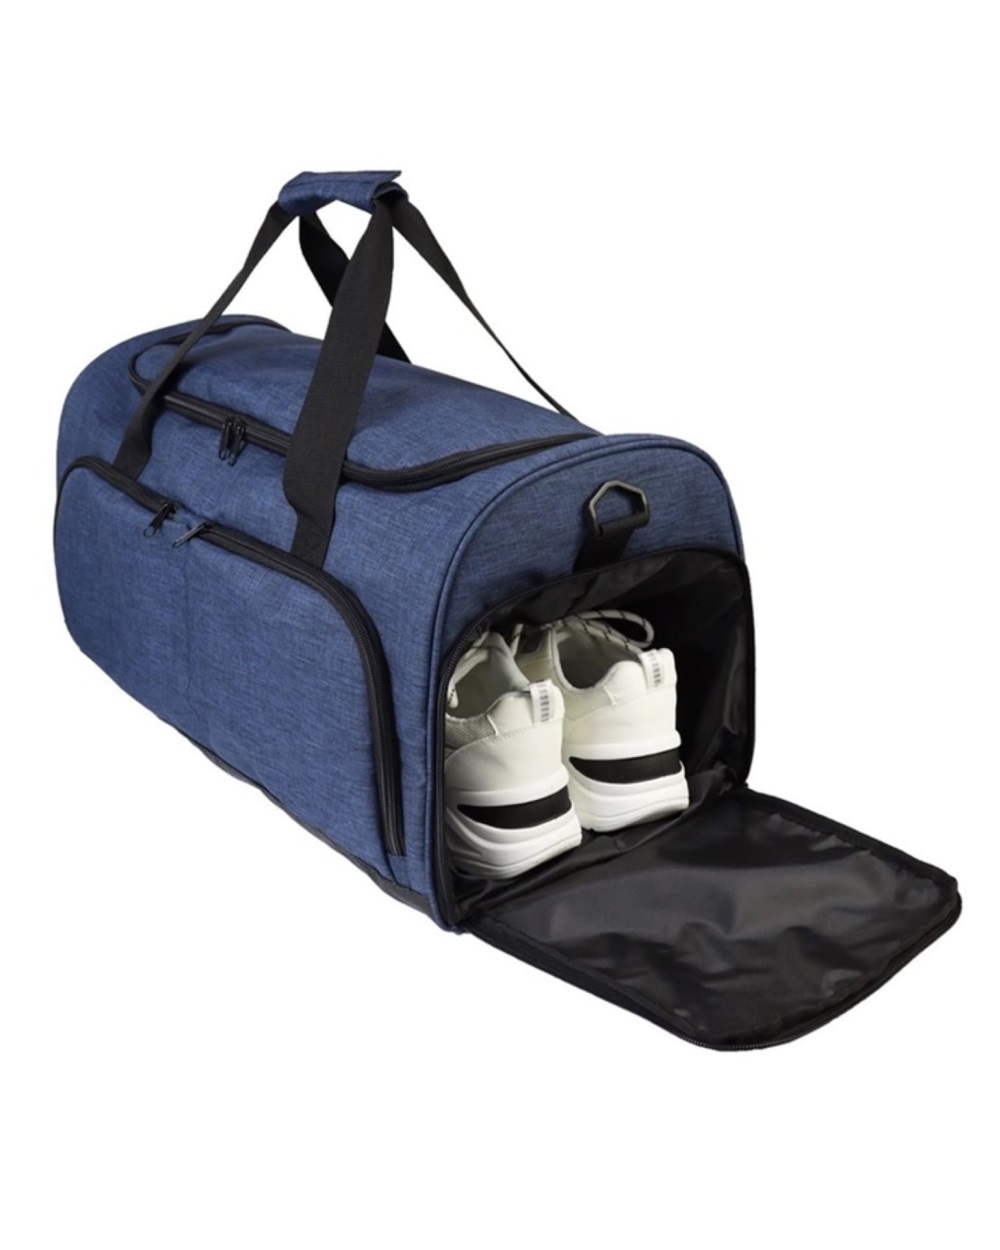 travelbag blue side 1